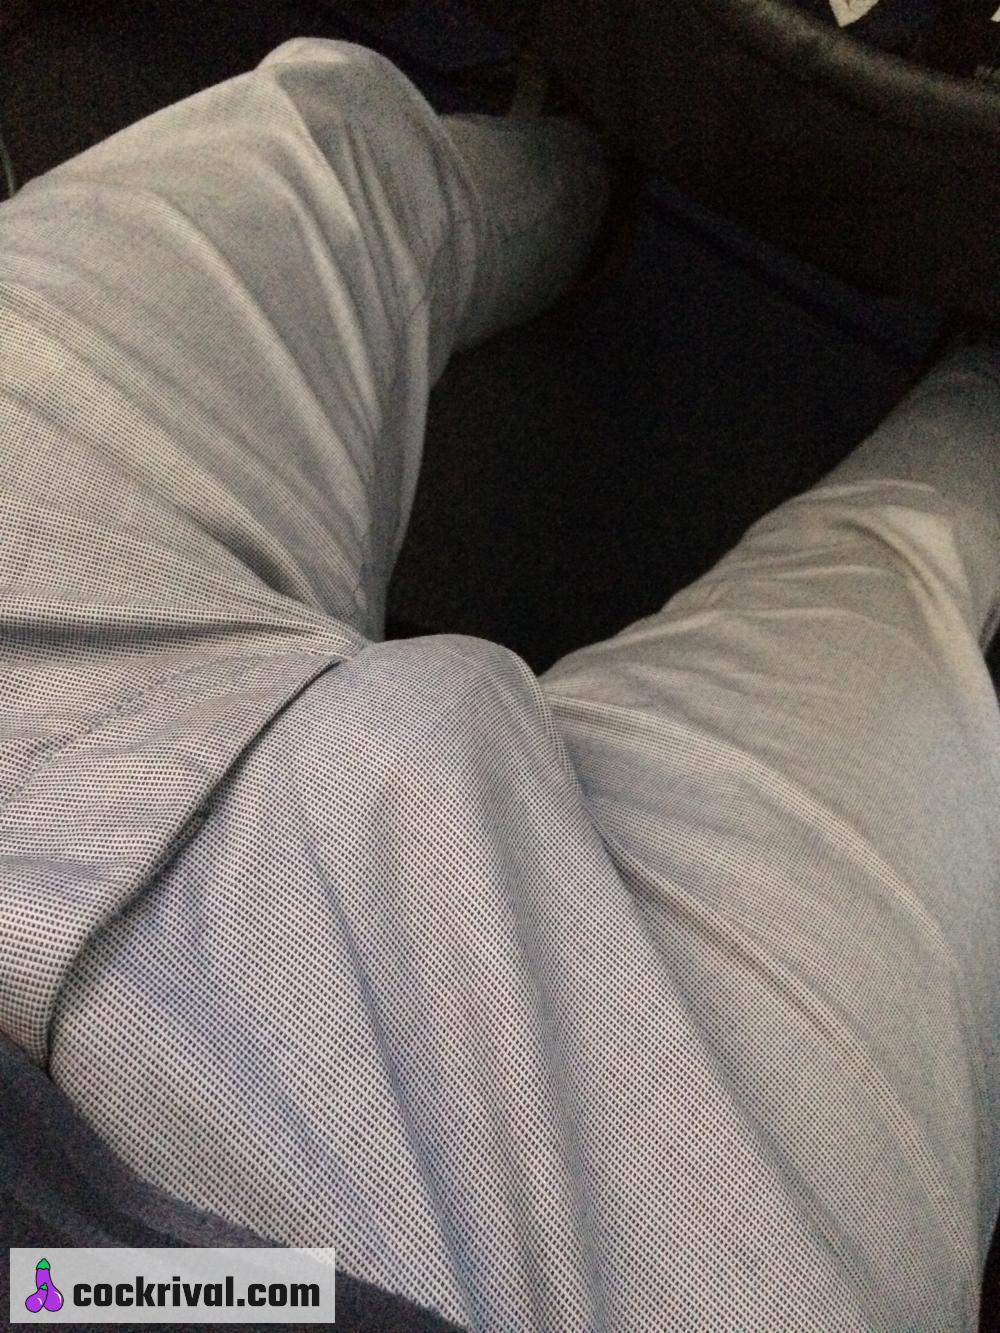 Bulge on a plane